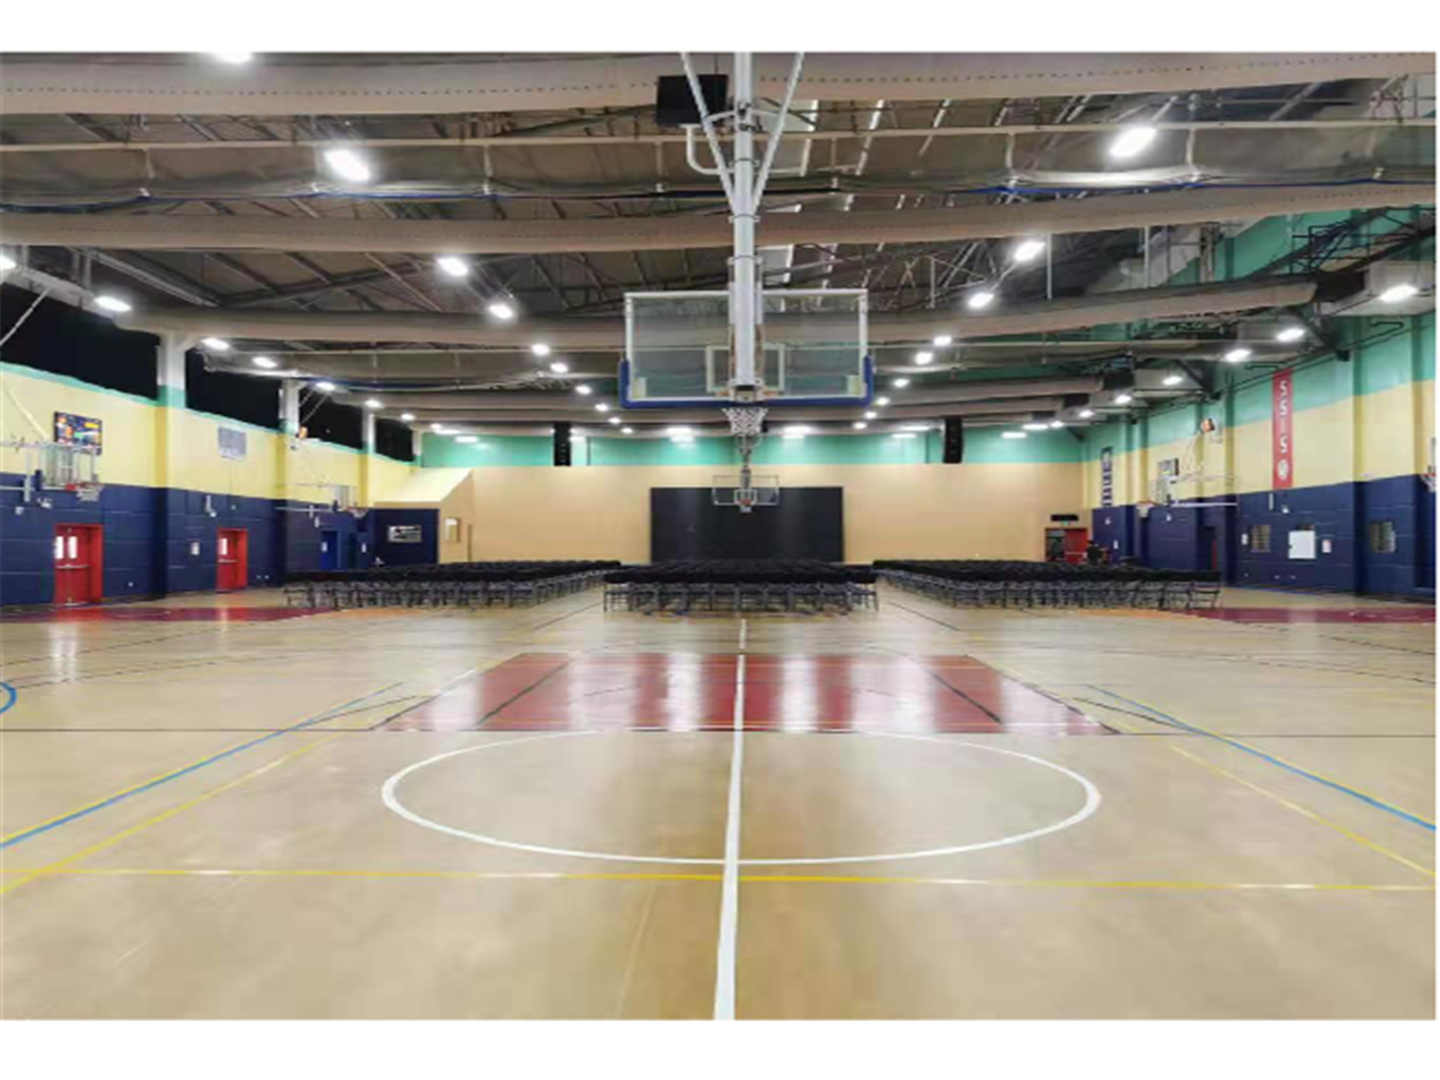 Singapore International School Basketball Stadium